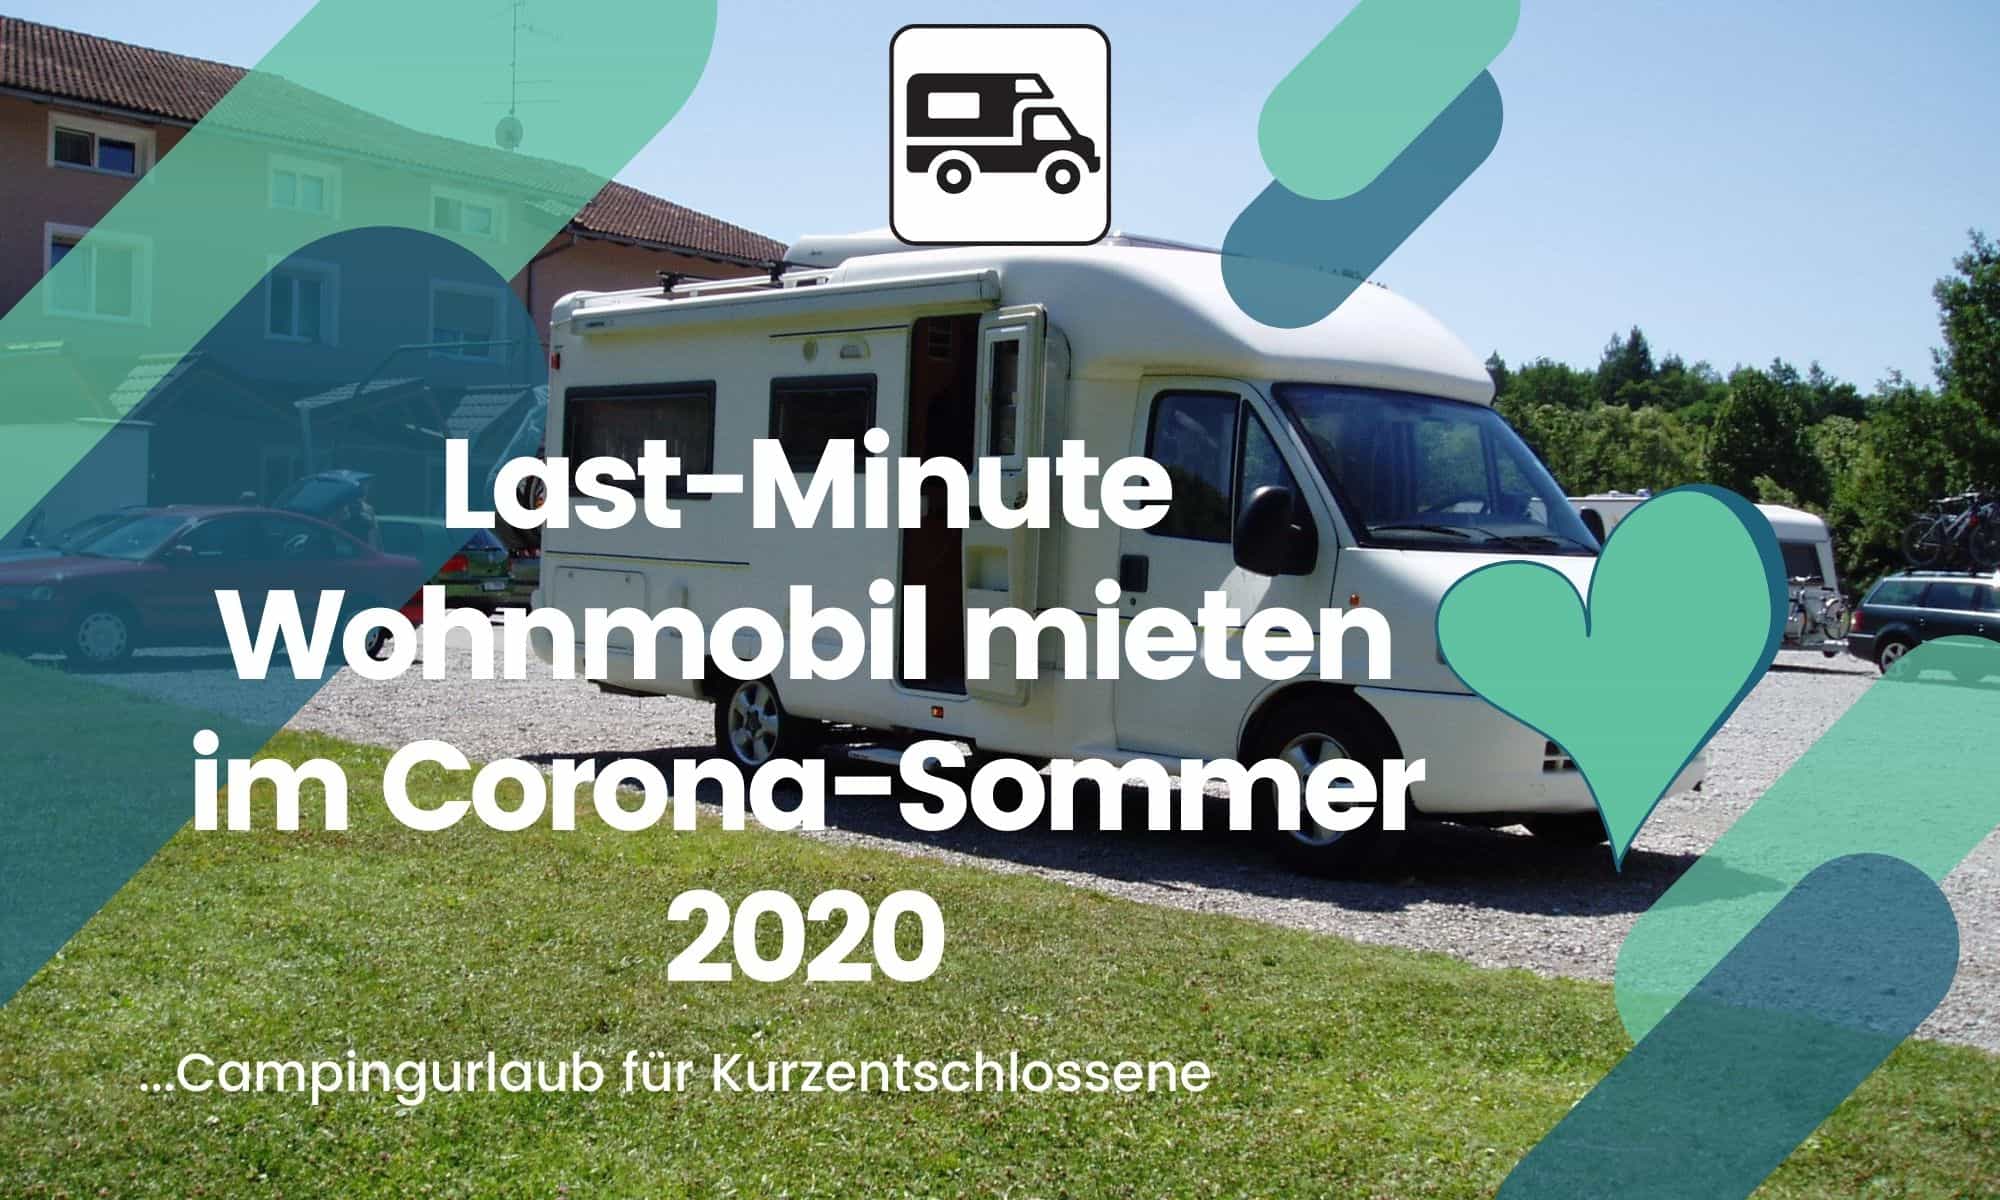 Last-Minute Wohnmobil mieten - Wochenrückblick Camping News KW31-2020